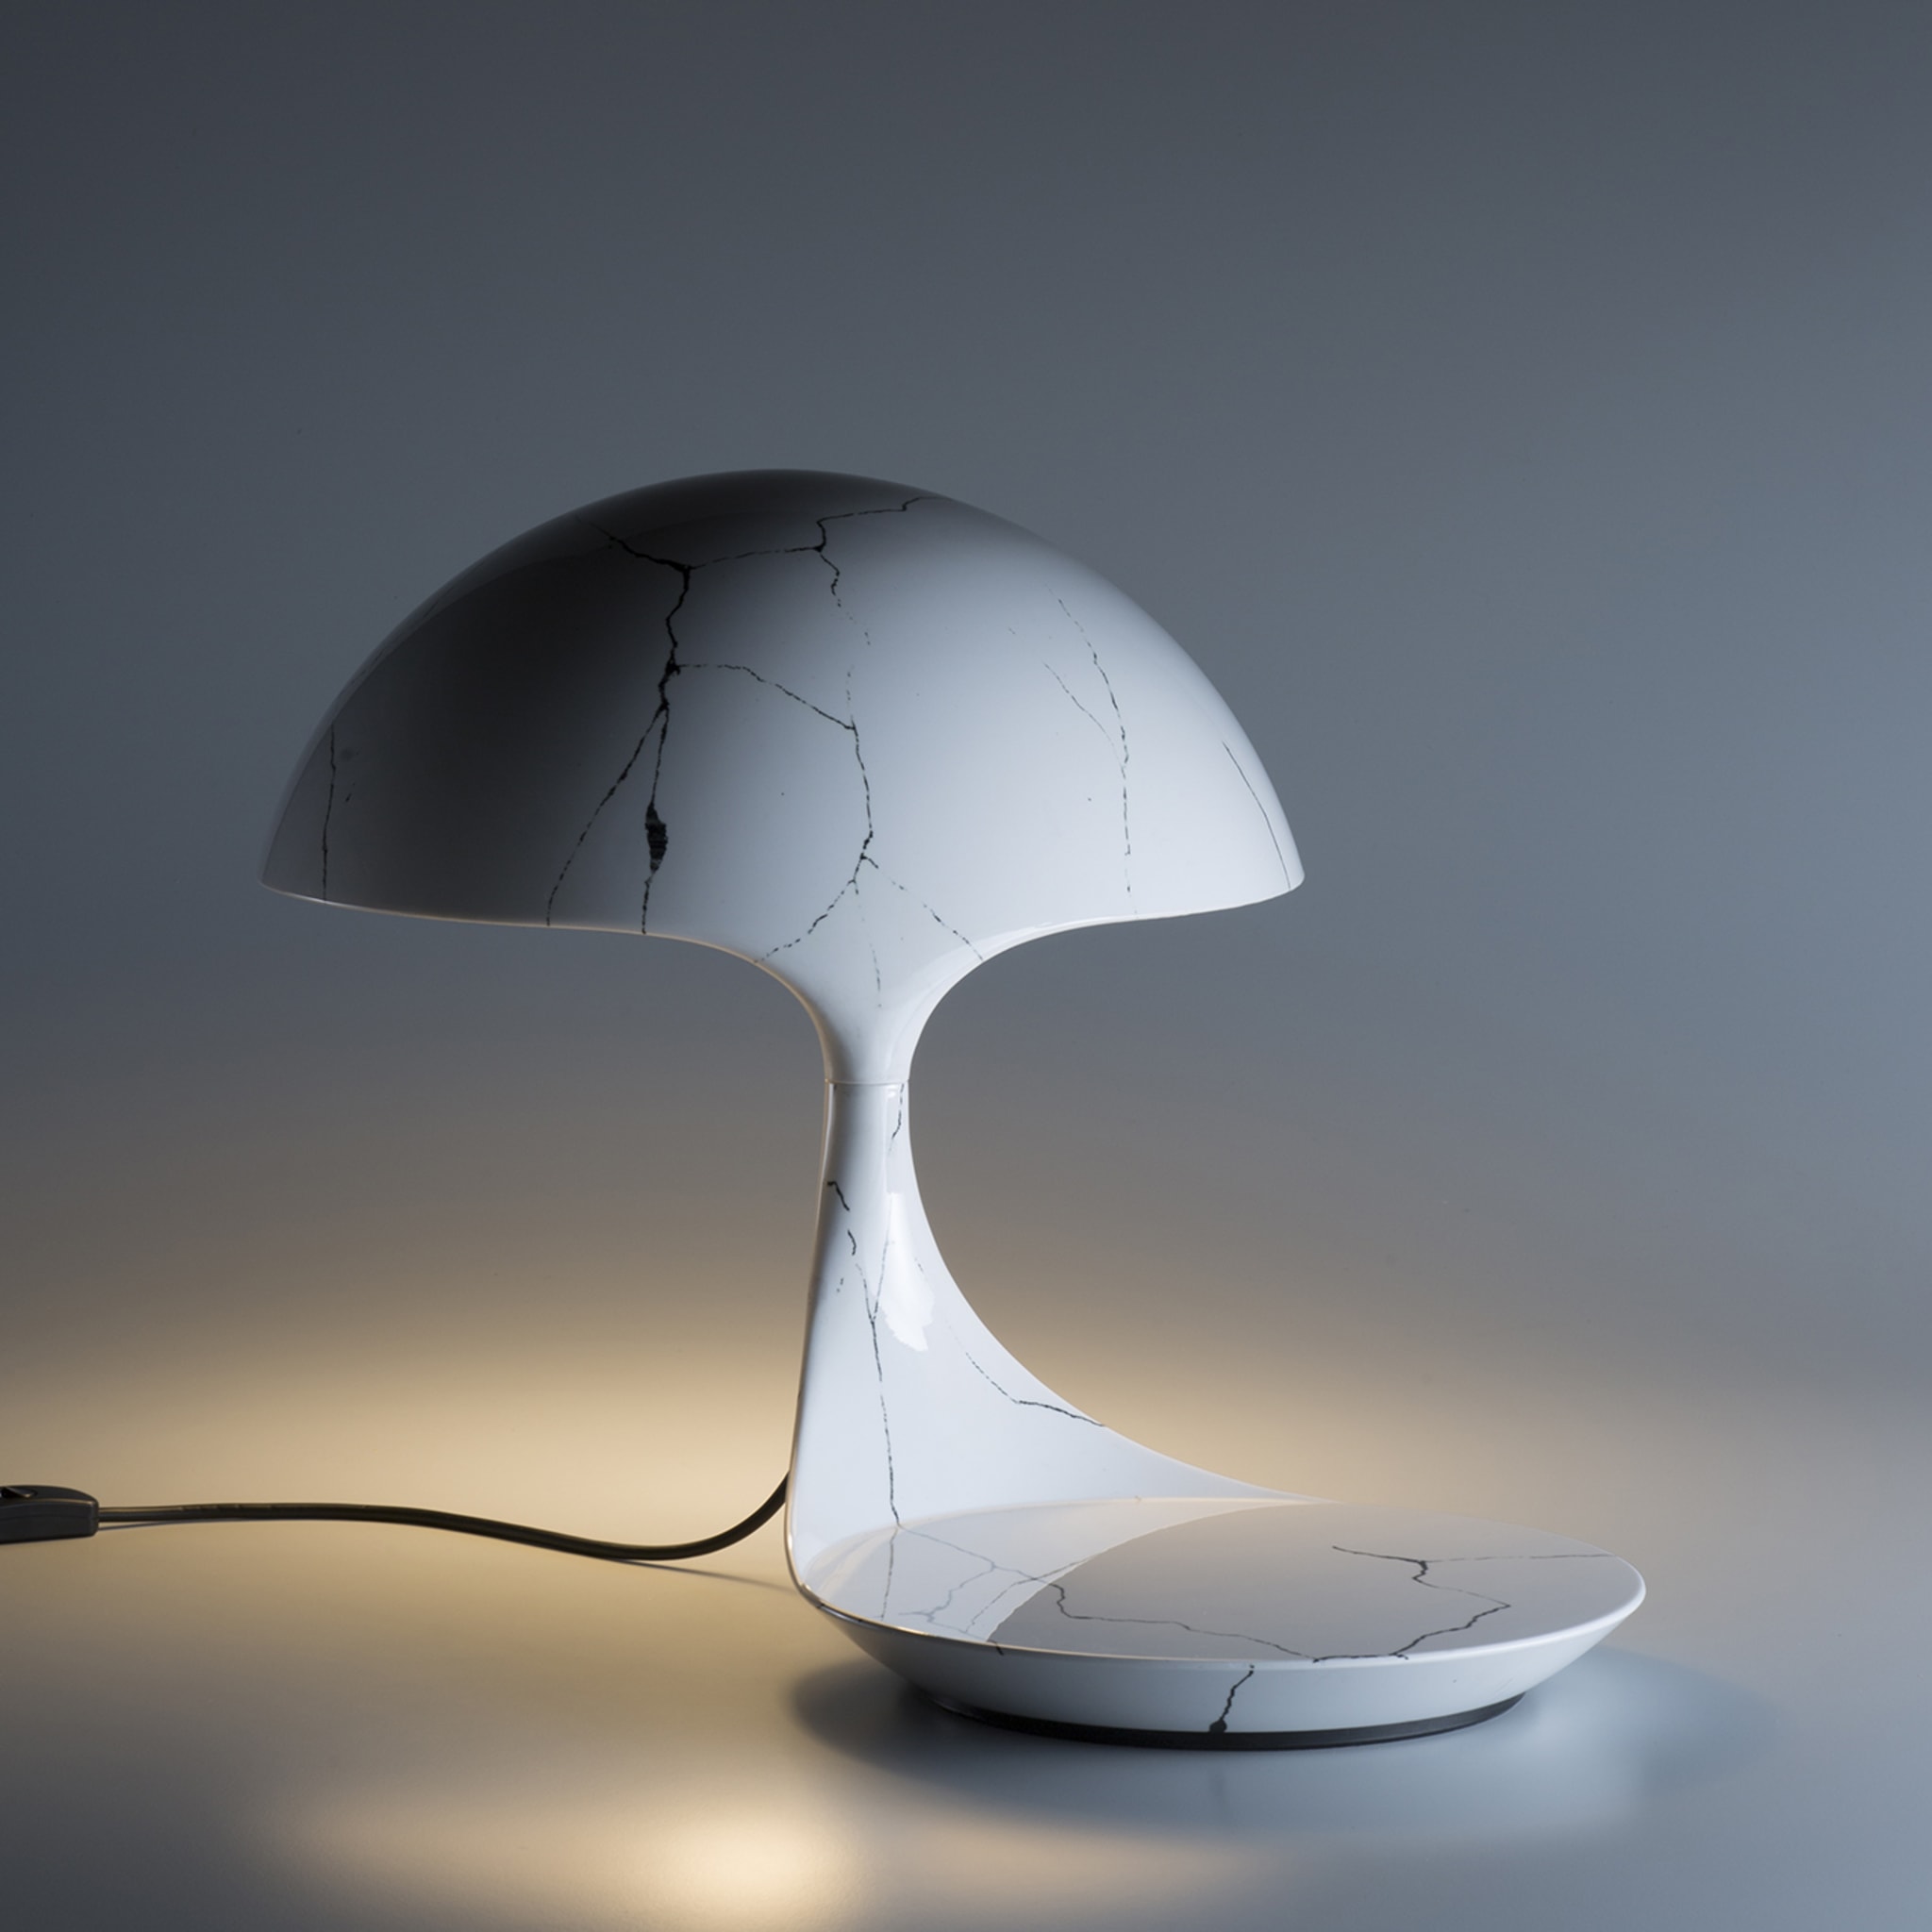 Cobra Texture Kintsugi Table Lamp by Paolo Orlandini - Alternative view 1